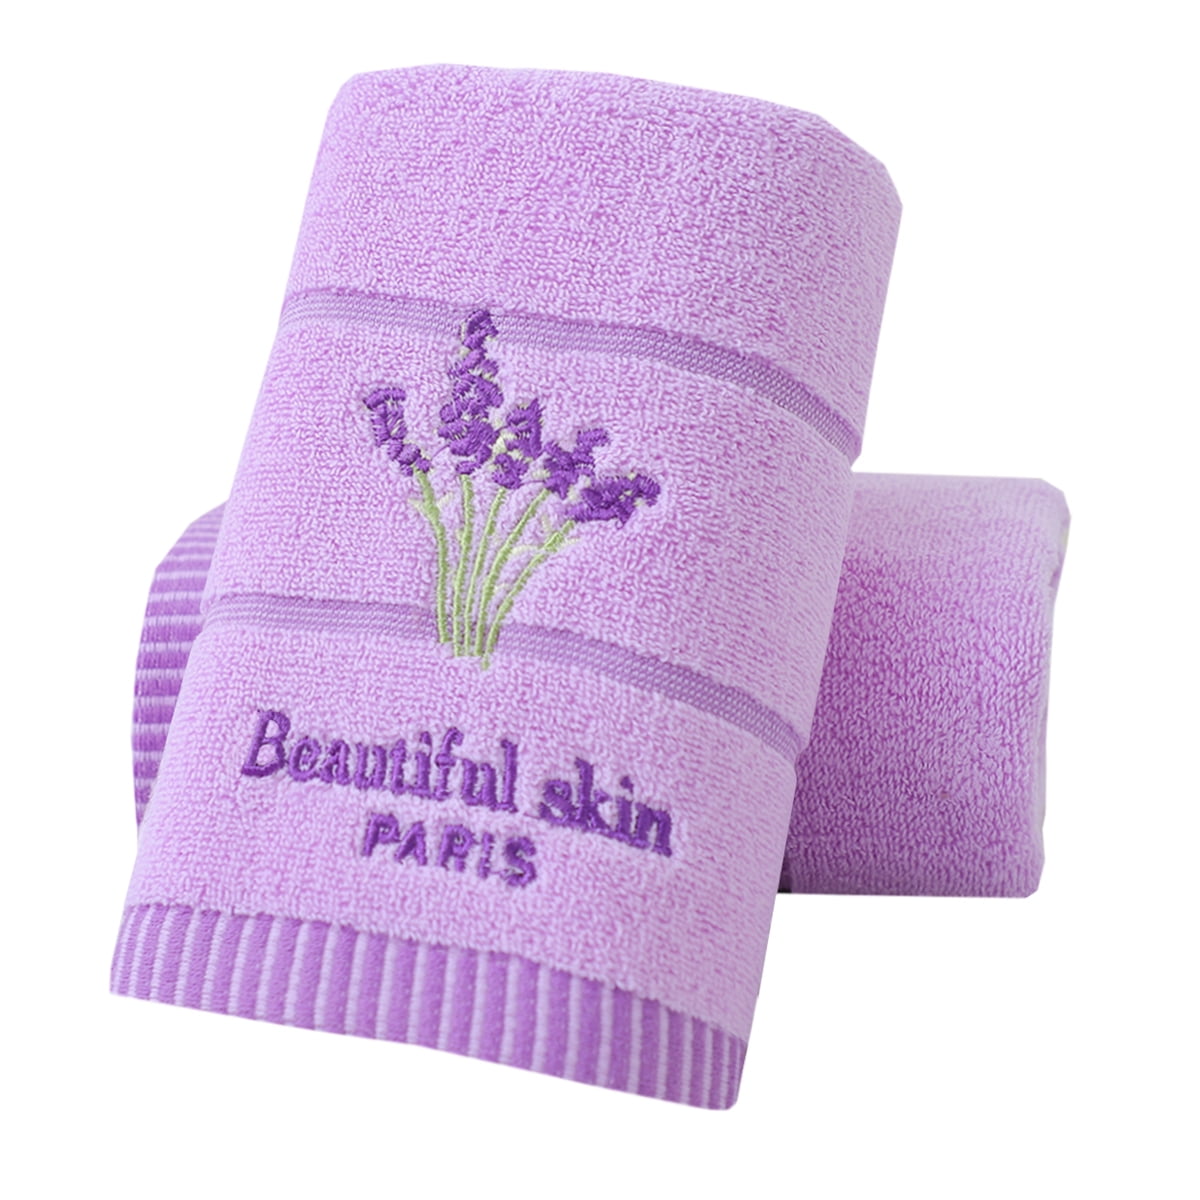 Pidada Hand Towels Set of 2 Embroidered Bird Tree Pattern 100% Cotton Absorbent Soft Towel for Bathroom 13.8 x 29.5 inch (Aqua Green)